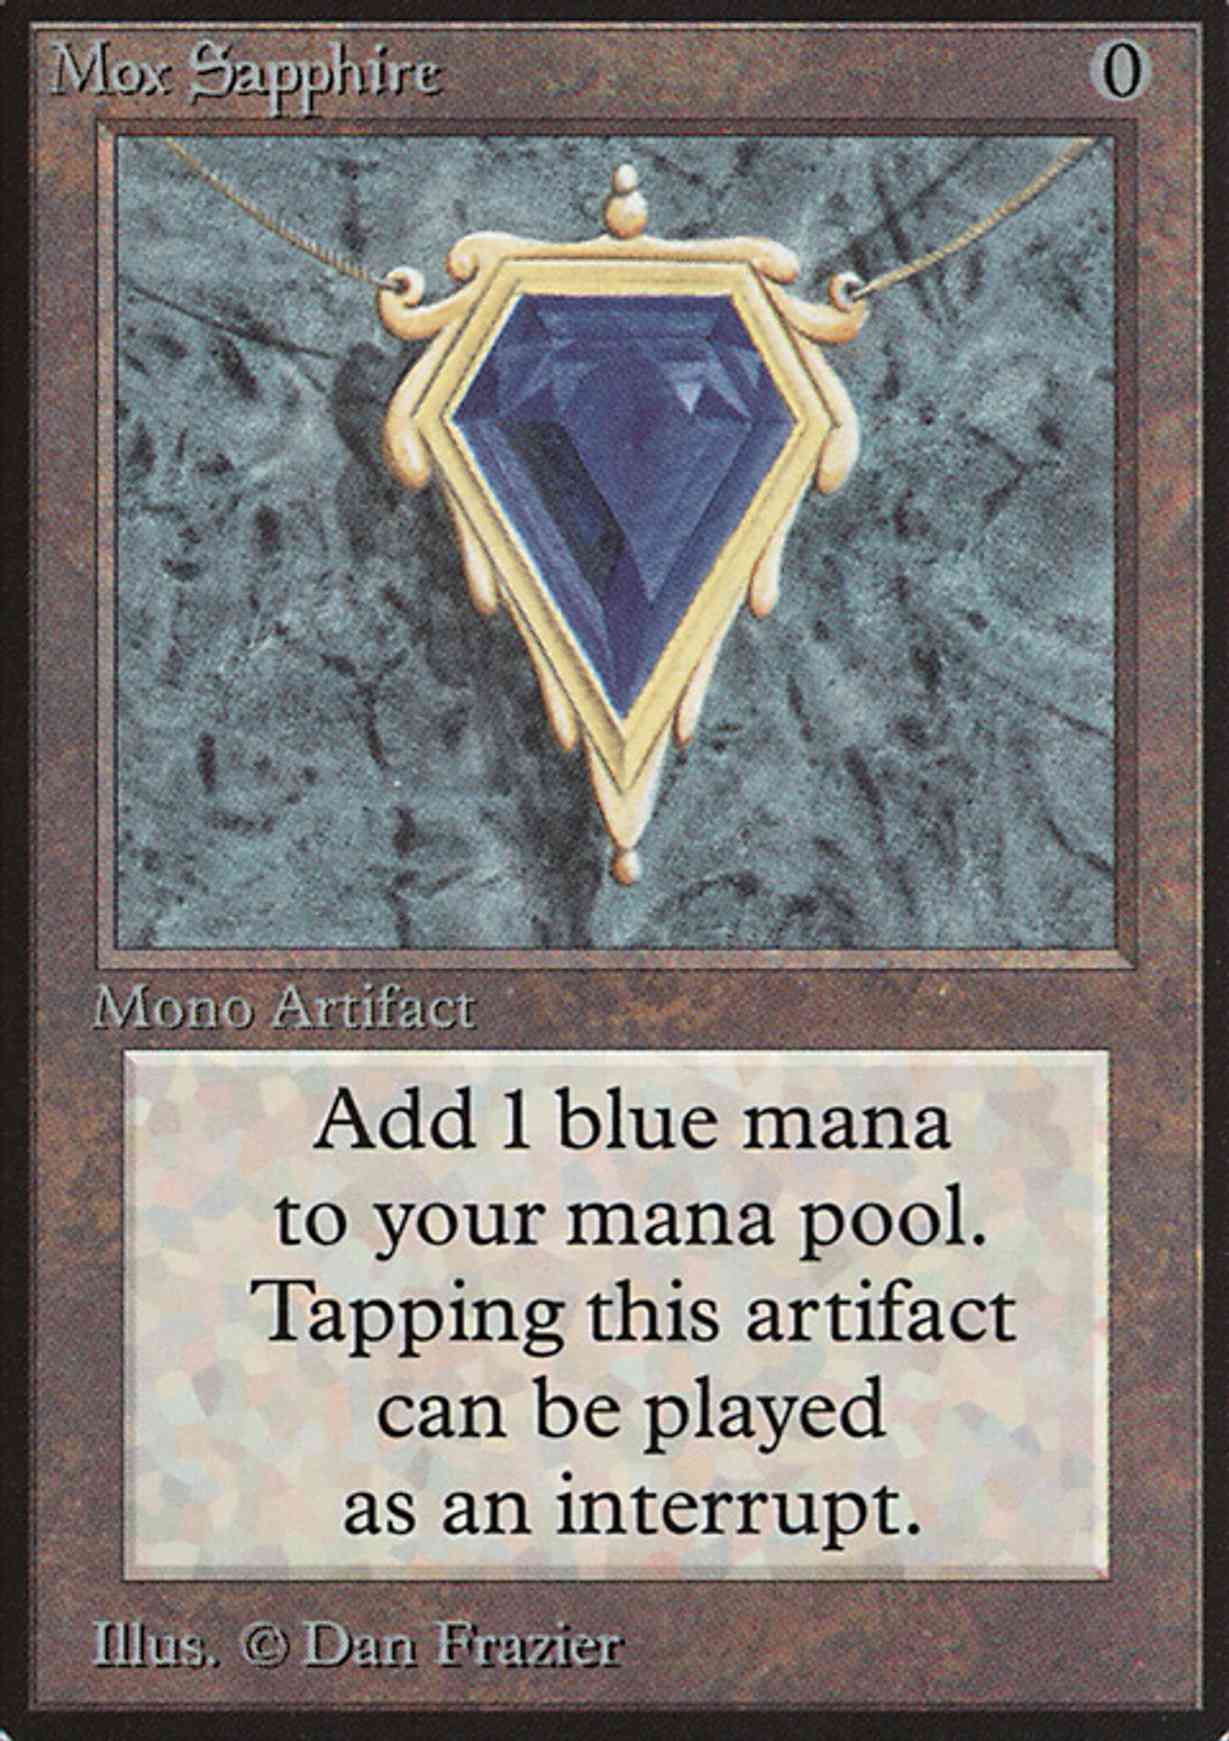 Mox Sapphire magic card front